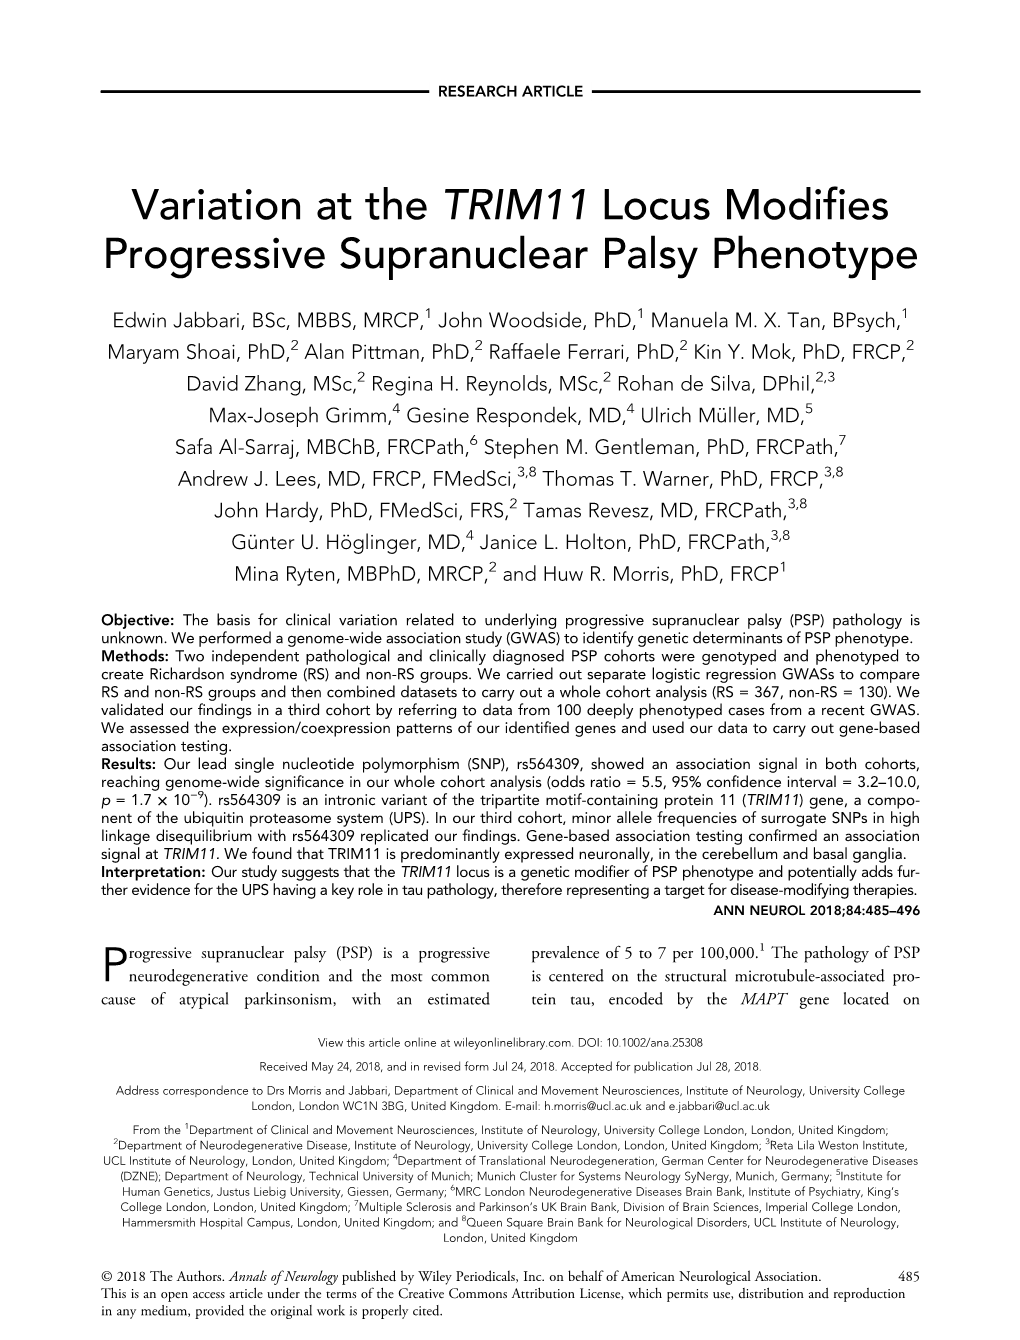 Variation at the TRIM11 Locus Modifies Progressive Supranuclear Palsy Phenotype